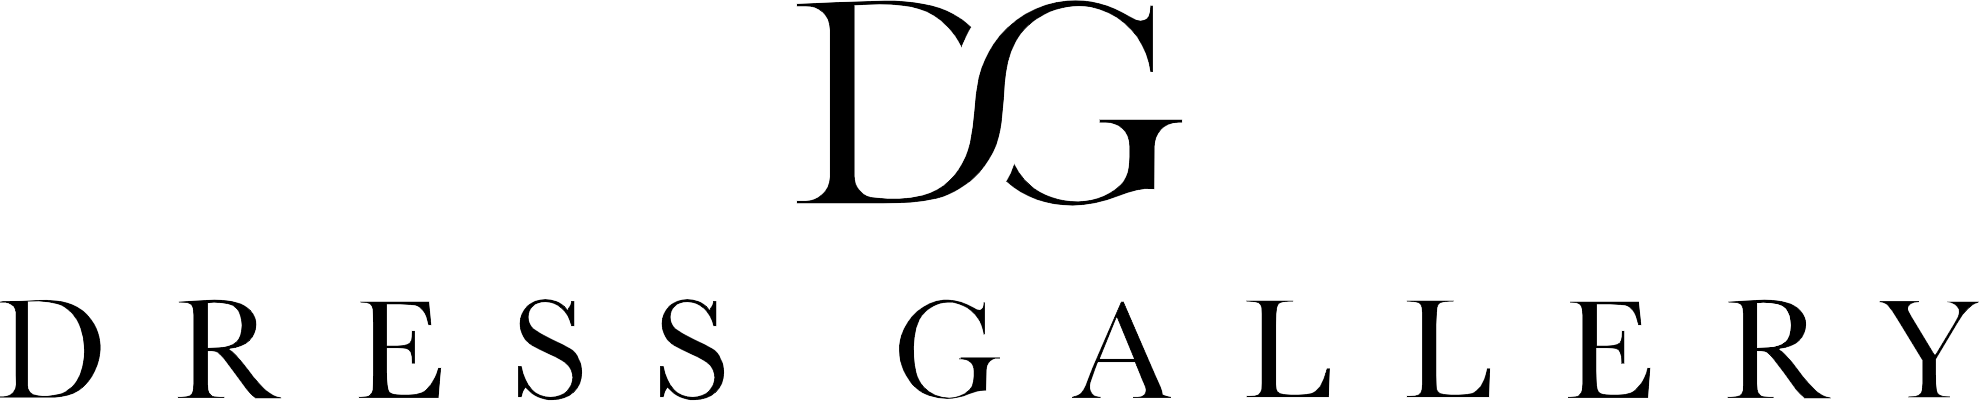 Dress Gallery Logo